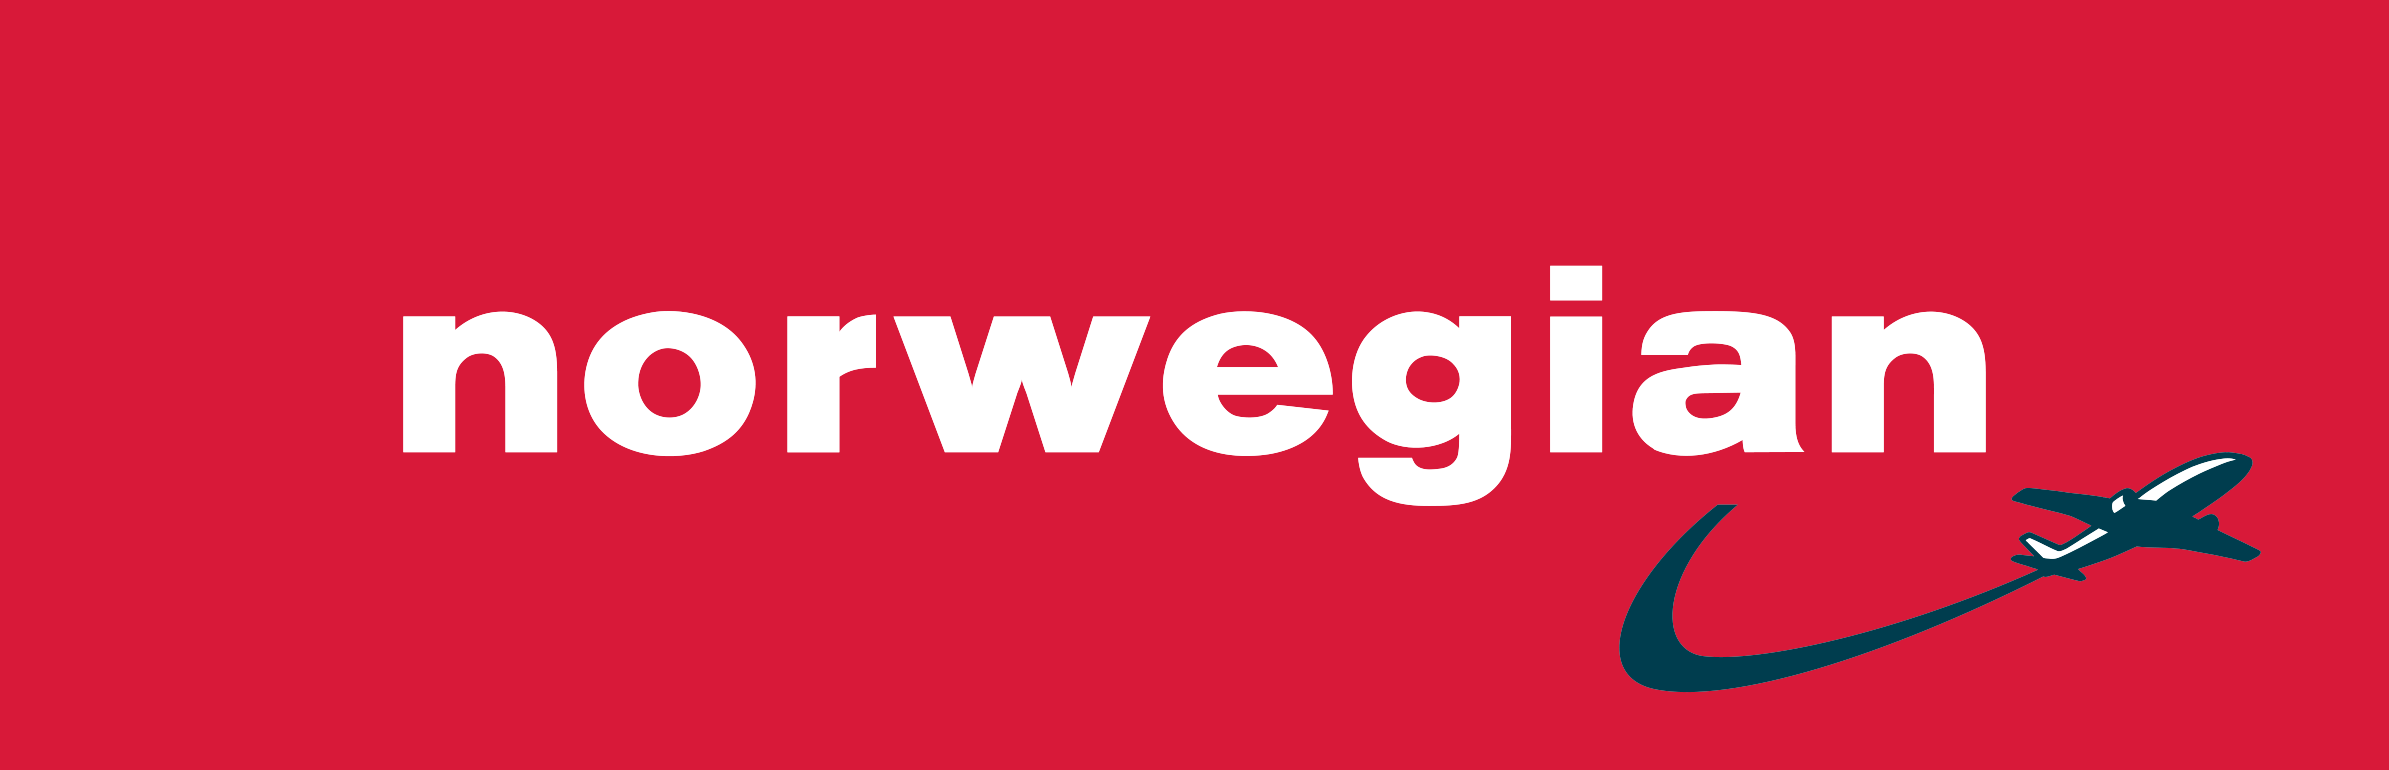 RGB-Norwegian-logo-png